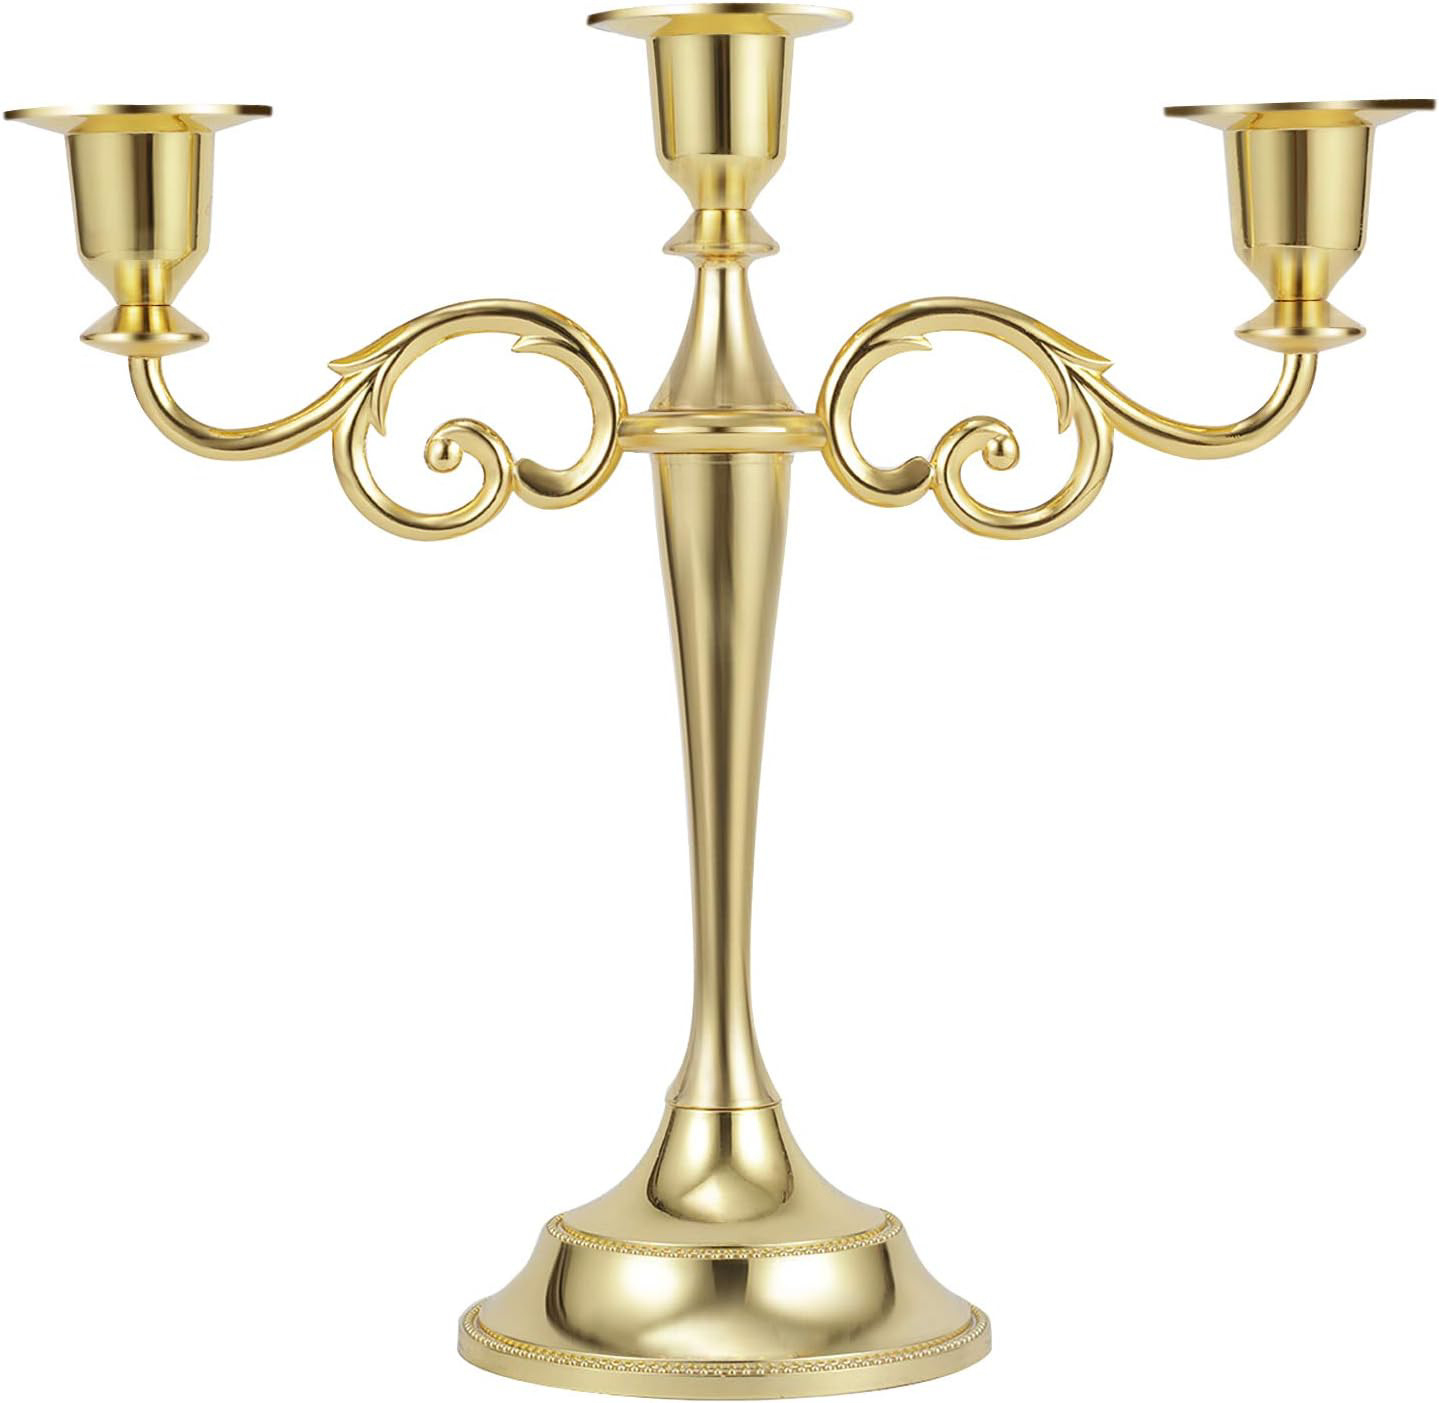 Dyna-Living Candelabra Candle Holders 3-arms Gold Candlestick Holder Metal Cande